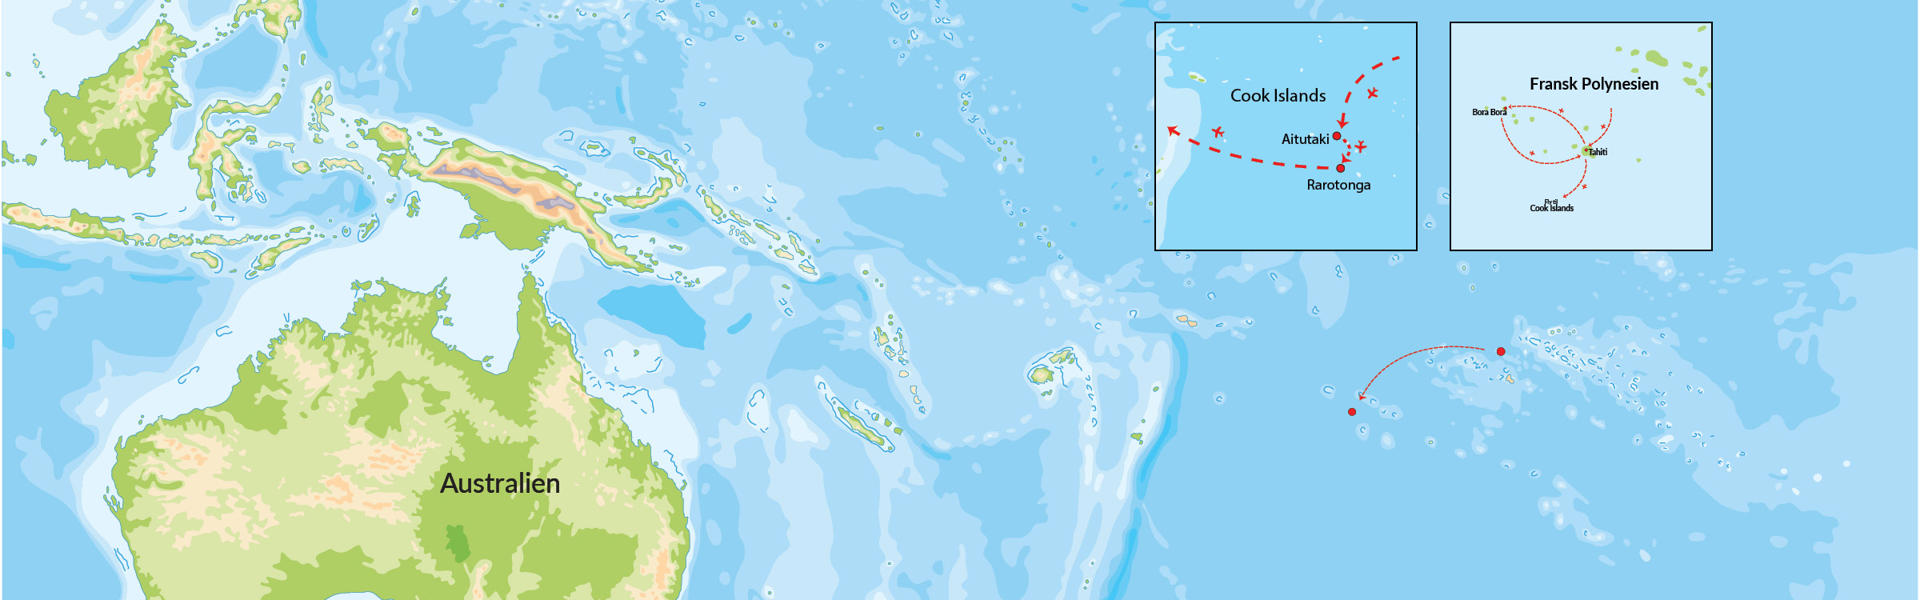 DK Polynesien 2019